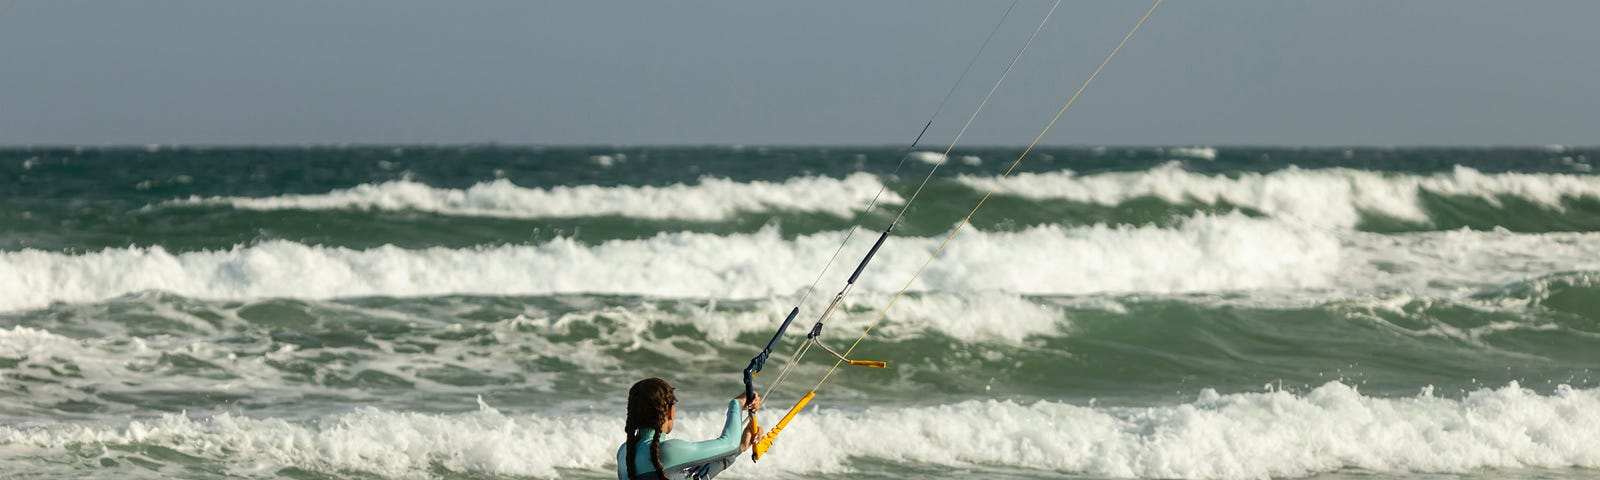 A kite surfer enjoying the ocean waves